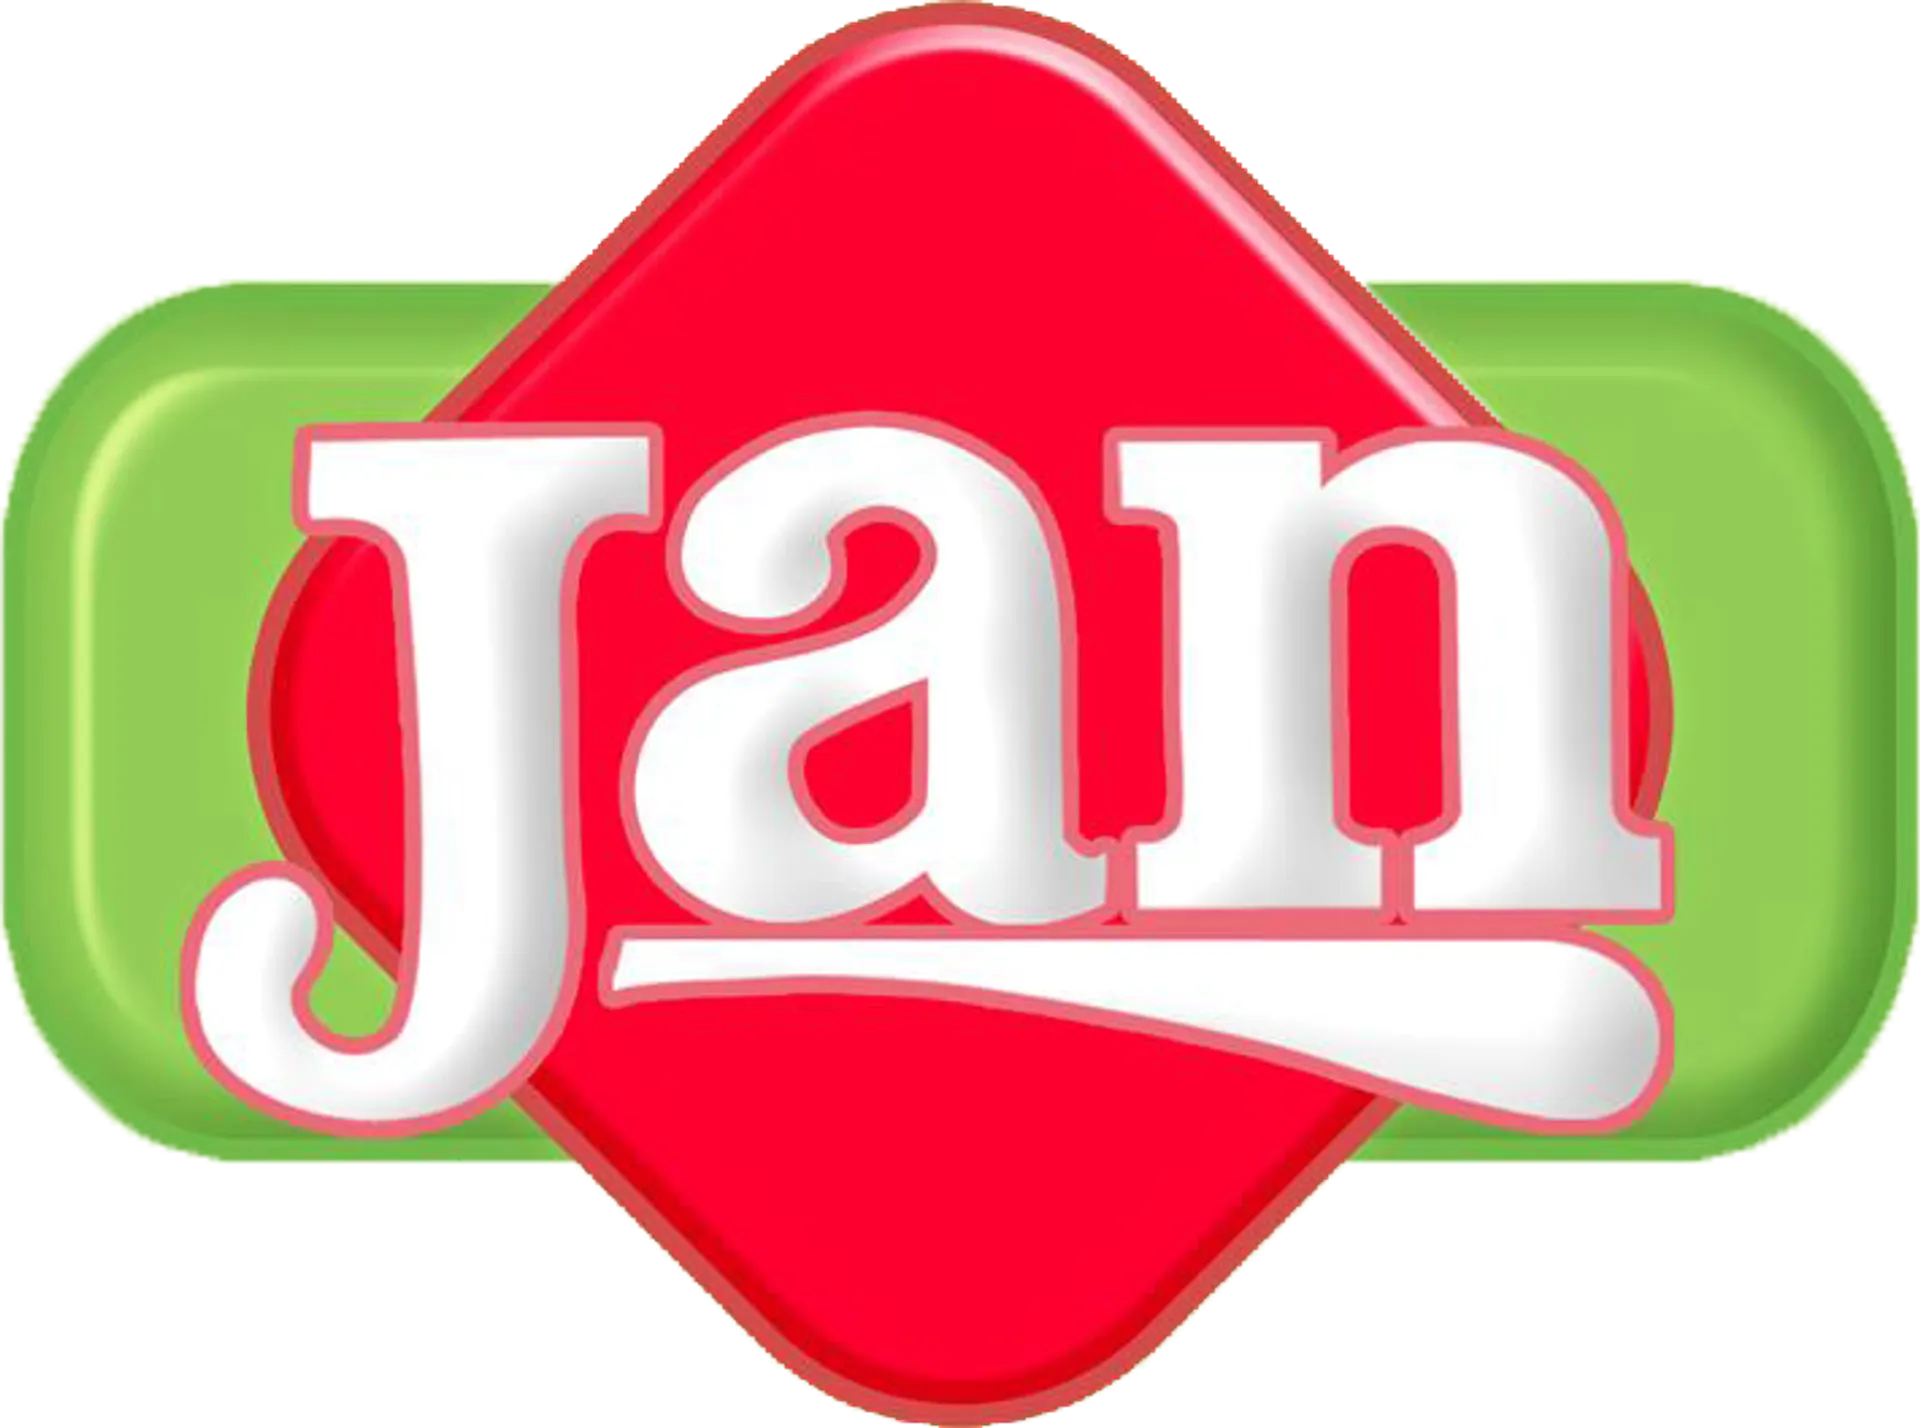 MARKET JAN logo